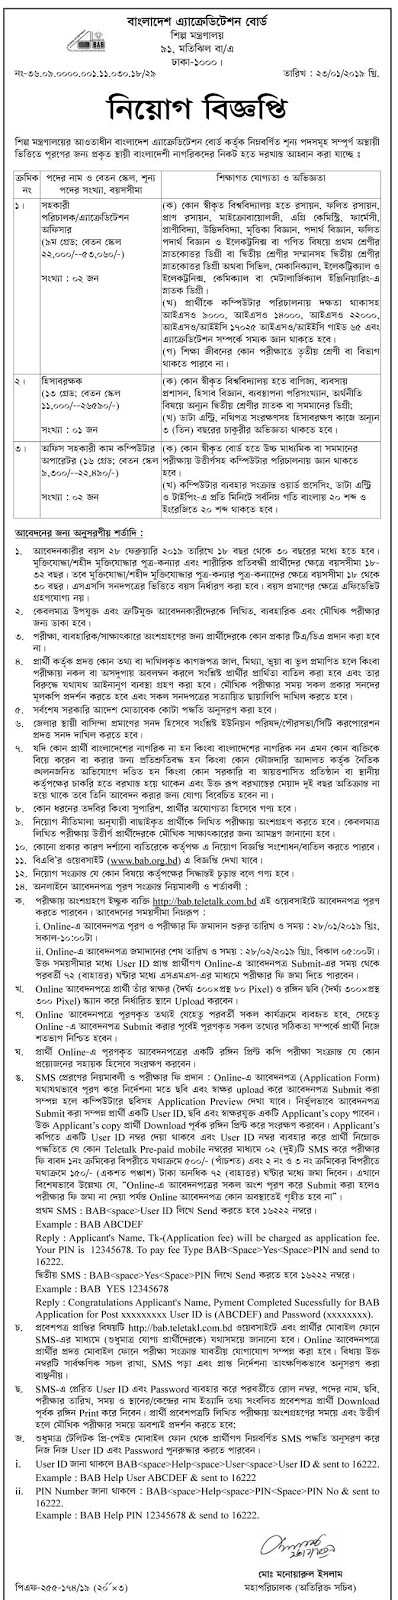 Bangladesh Accreditation Board (BAB) Job Circular 2019